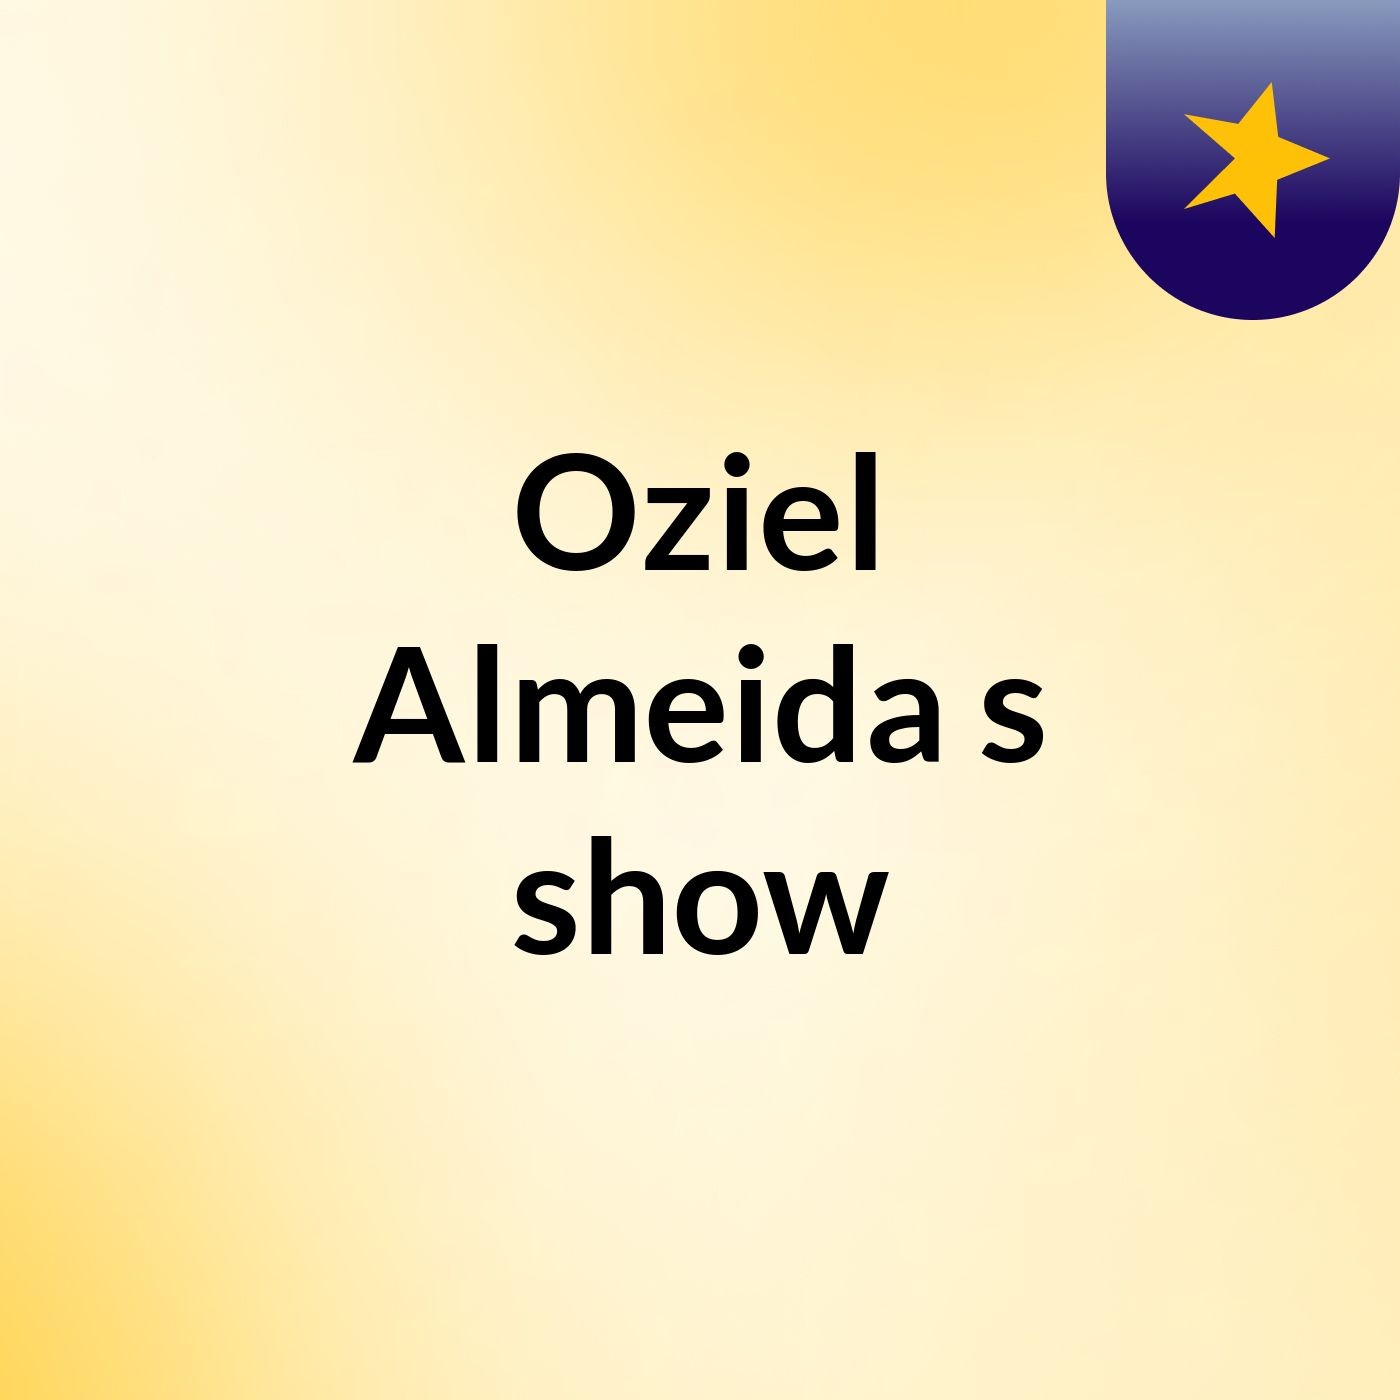 Oziel Almeida's show